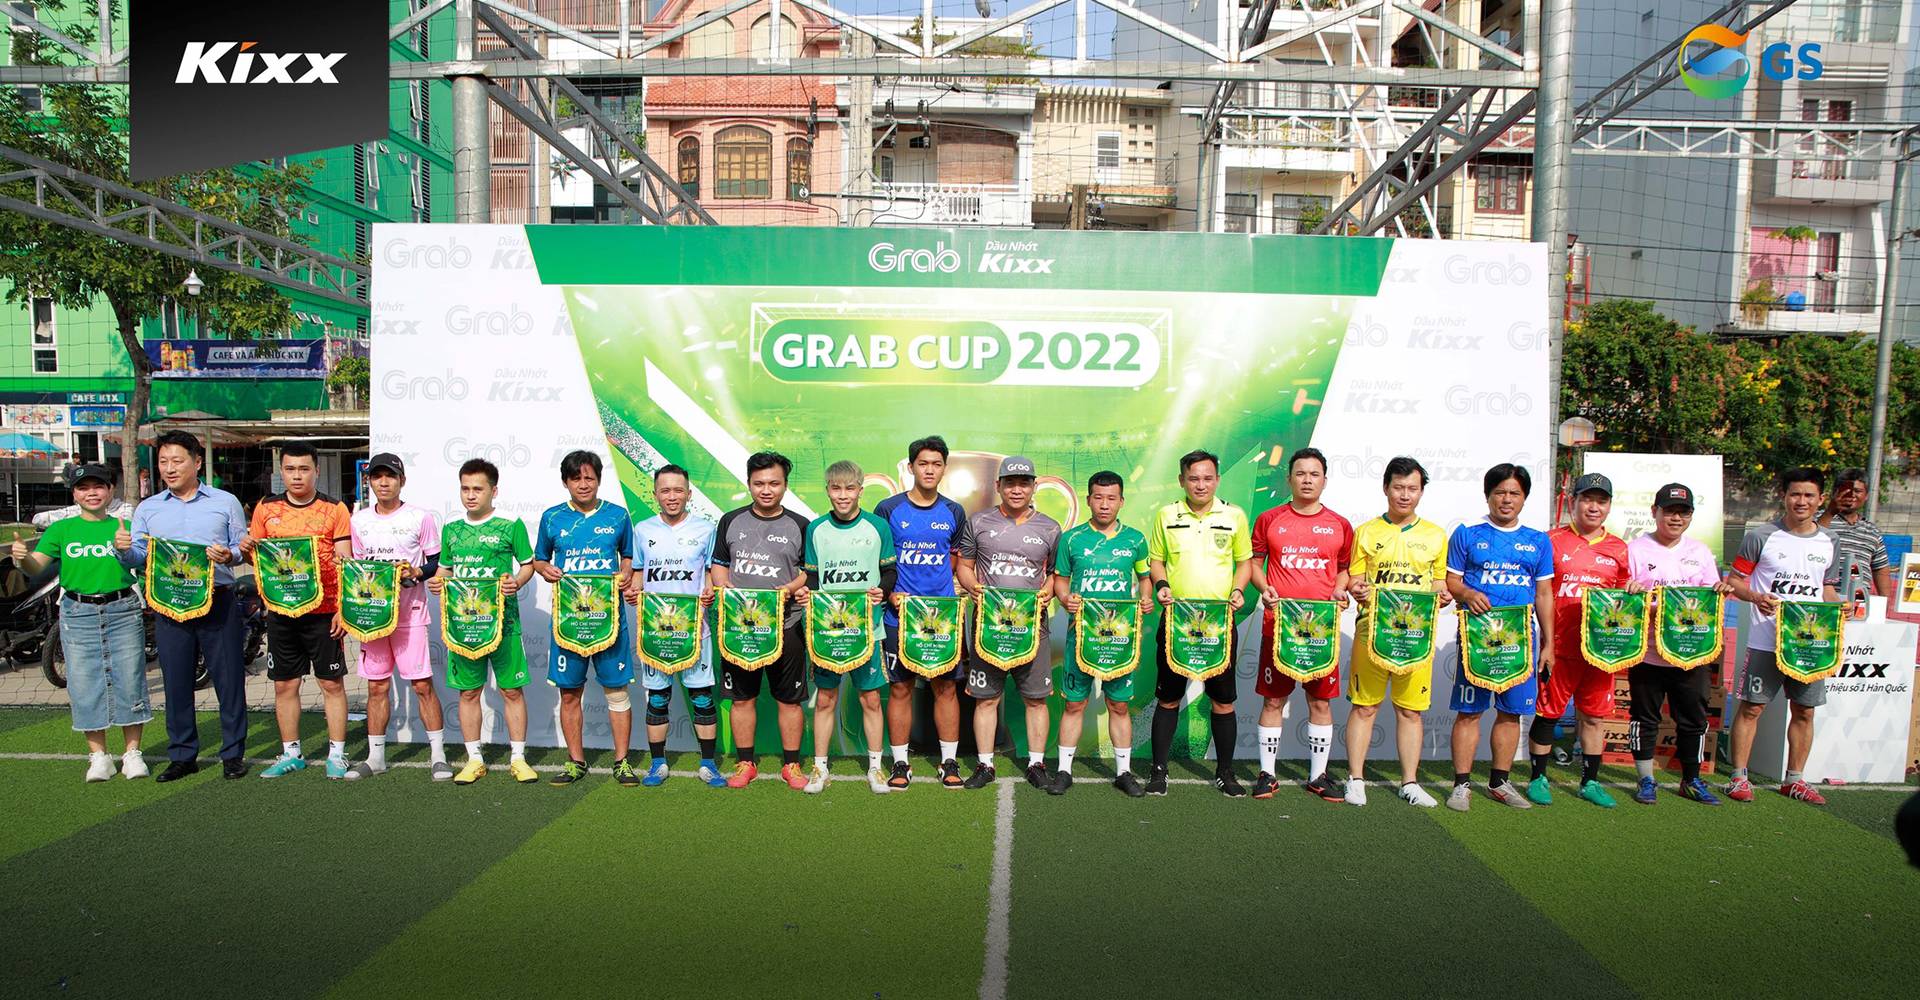 Kixx Sponsors Vietnam-based Grab Cup 2022